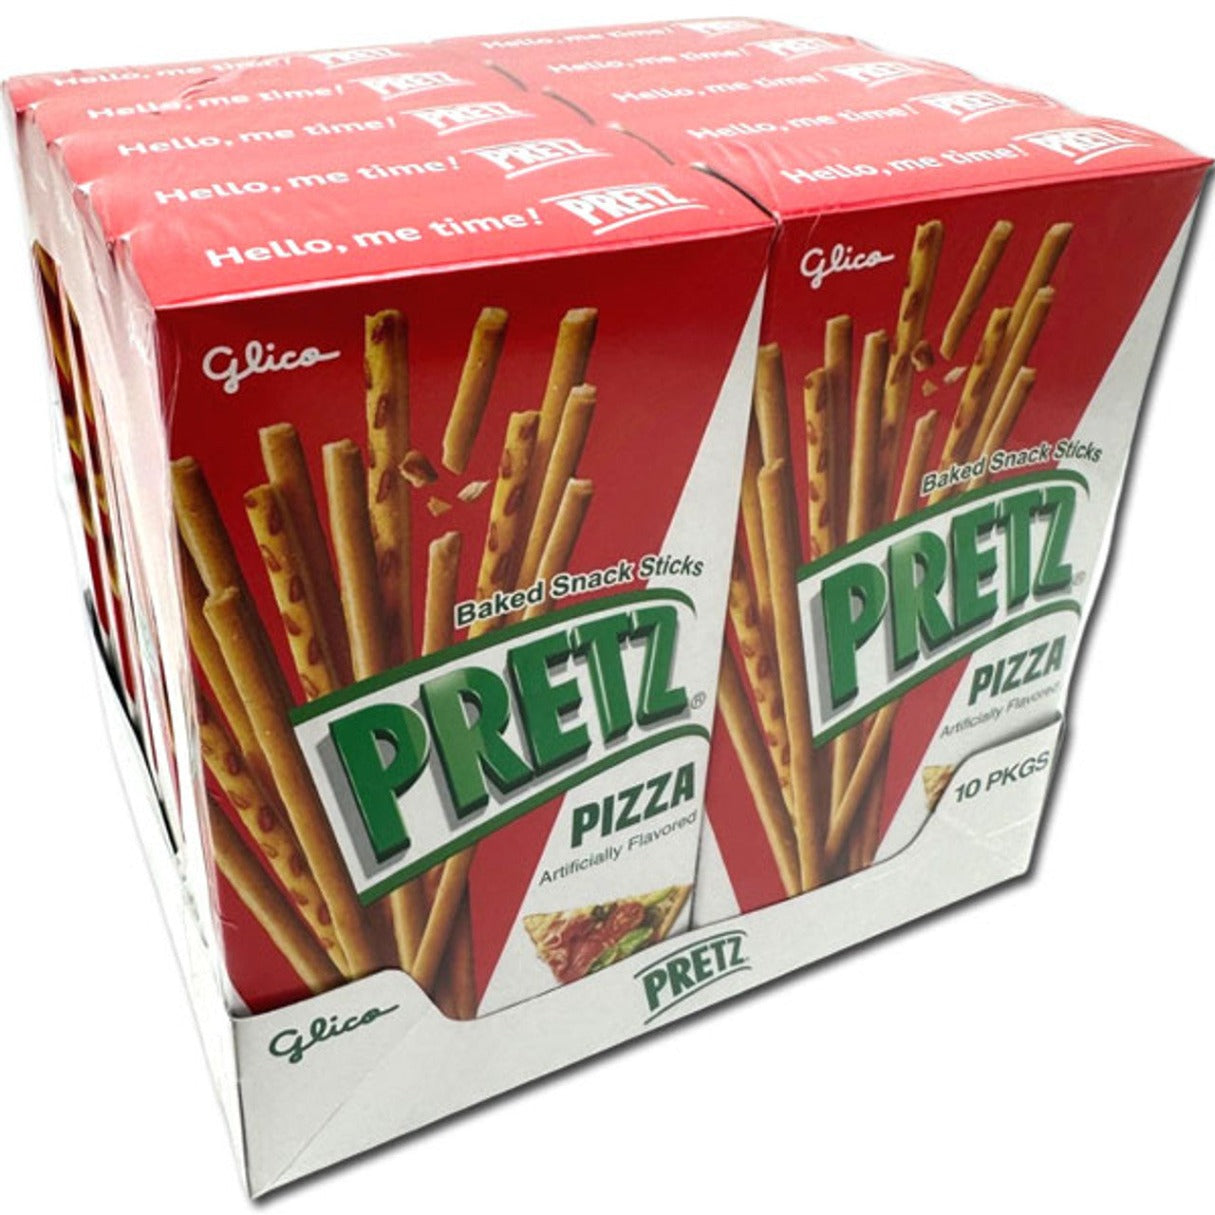 Glico Pretz Pizza Flavored Baked Snack Sticks  1.09oz - 10ct